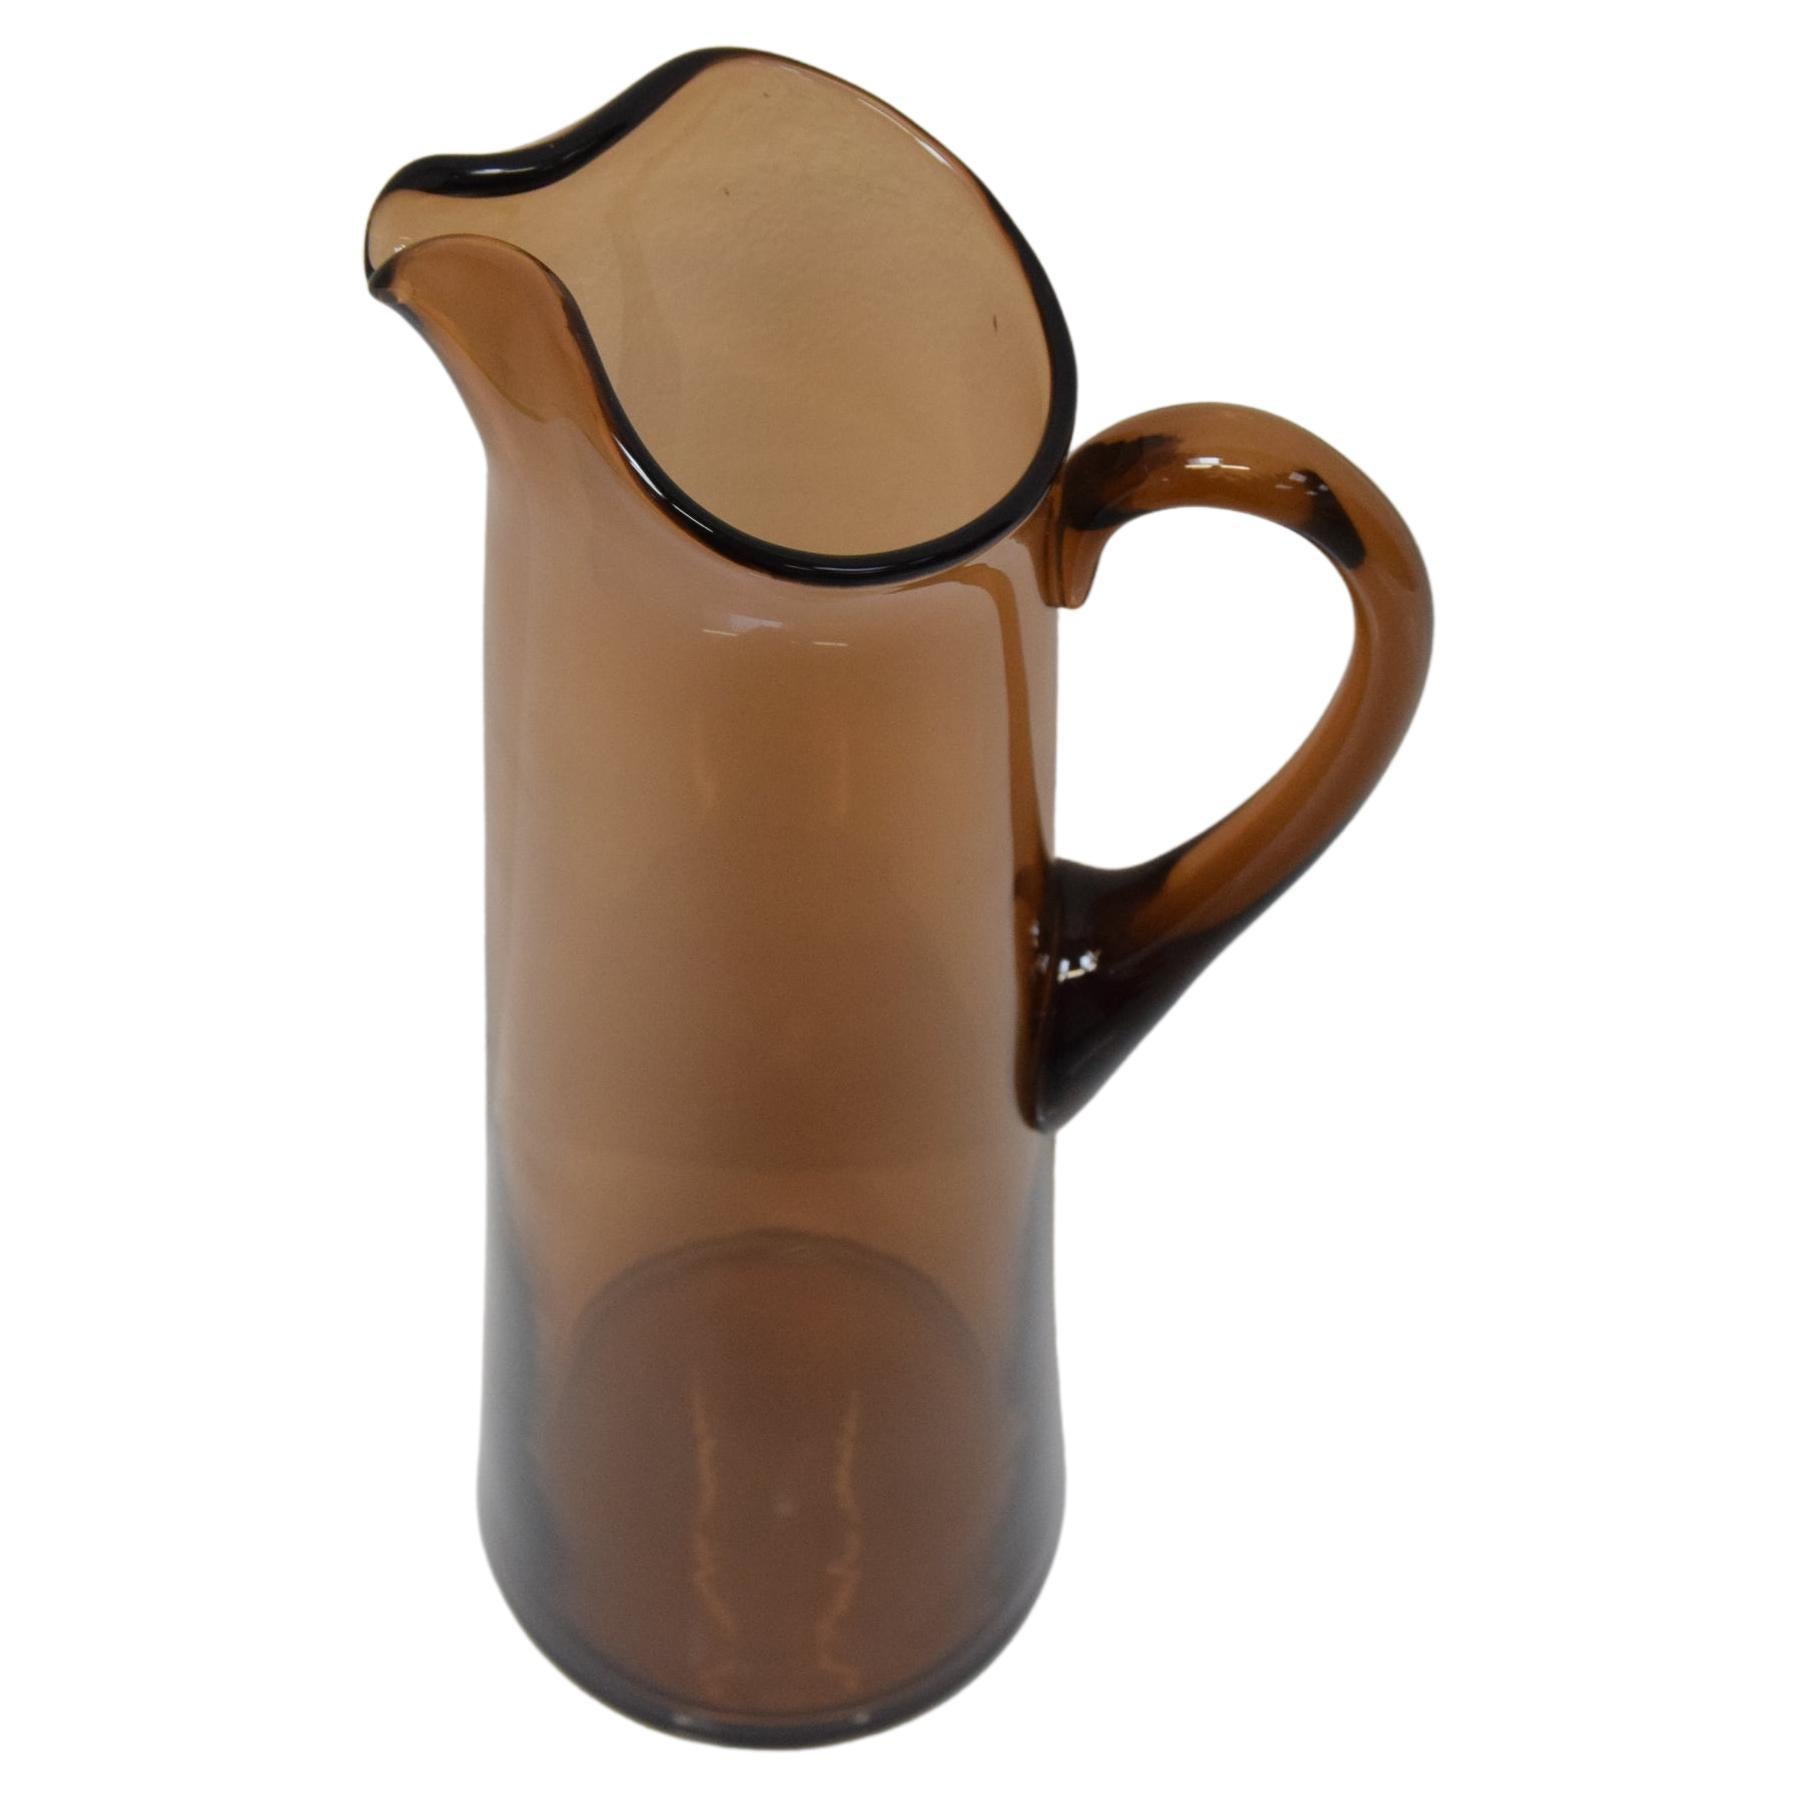 https://a.1stdibscdn.com/art-czech-glass-pitcher-by-glasswork-novy-bor-1950s-for-sale/f_24563/f_344956421685264162979/f_34495642_1685264163459_bg_processed.jpg